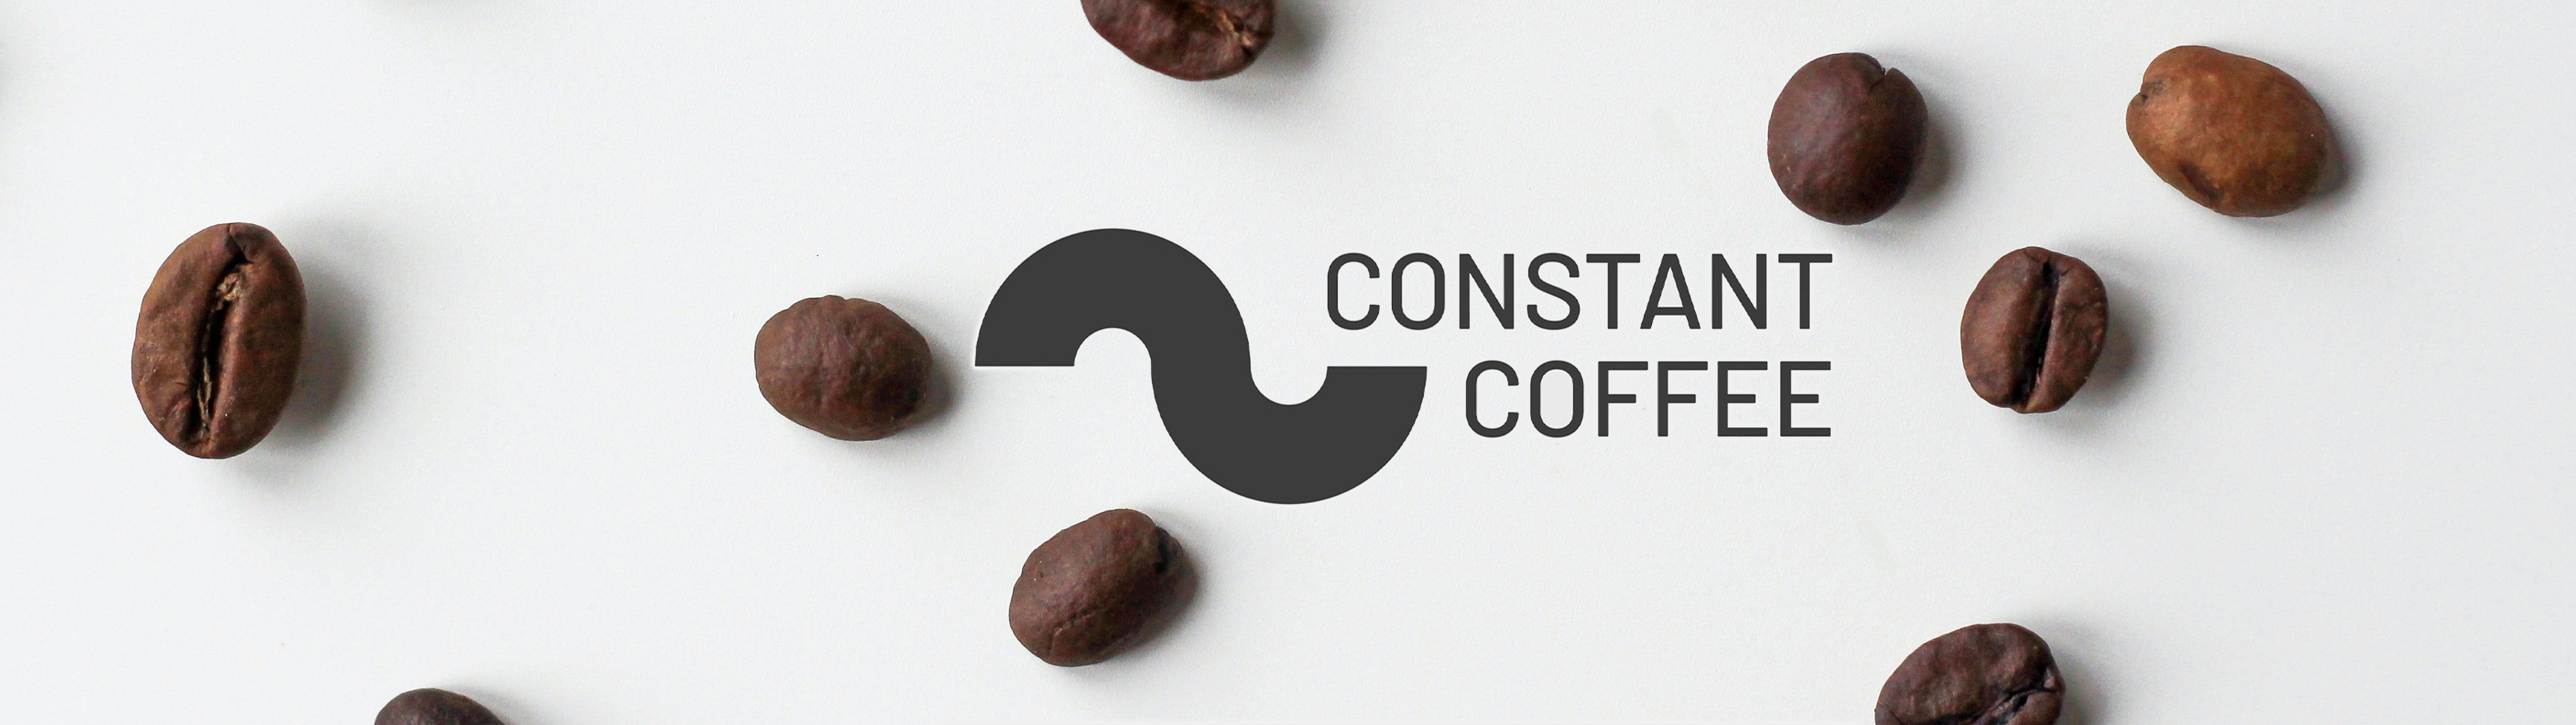 Constant Coffee